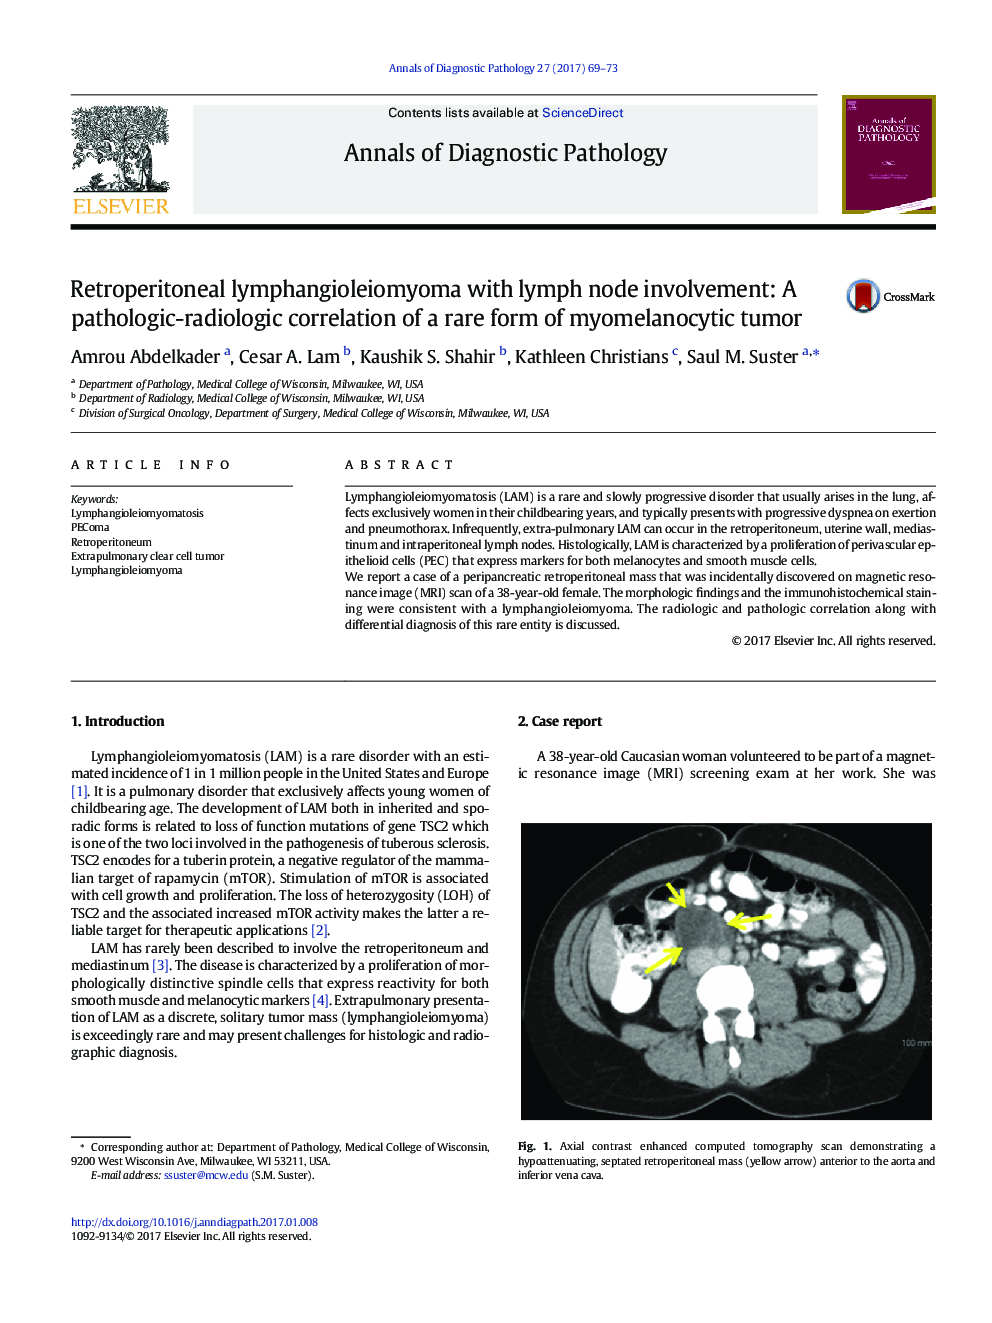 Original ContributionRetroperitoneal lymphangioleiomyoma with lymph node involvement: A pathologic-radiologic correlation of a rare form of myomelanocytic tumor